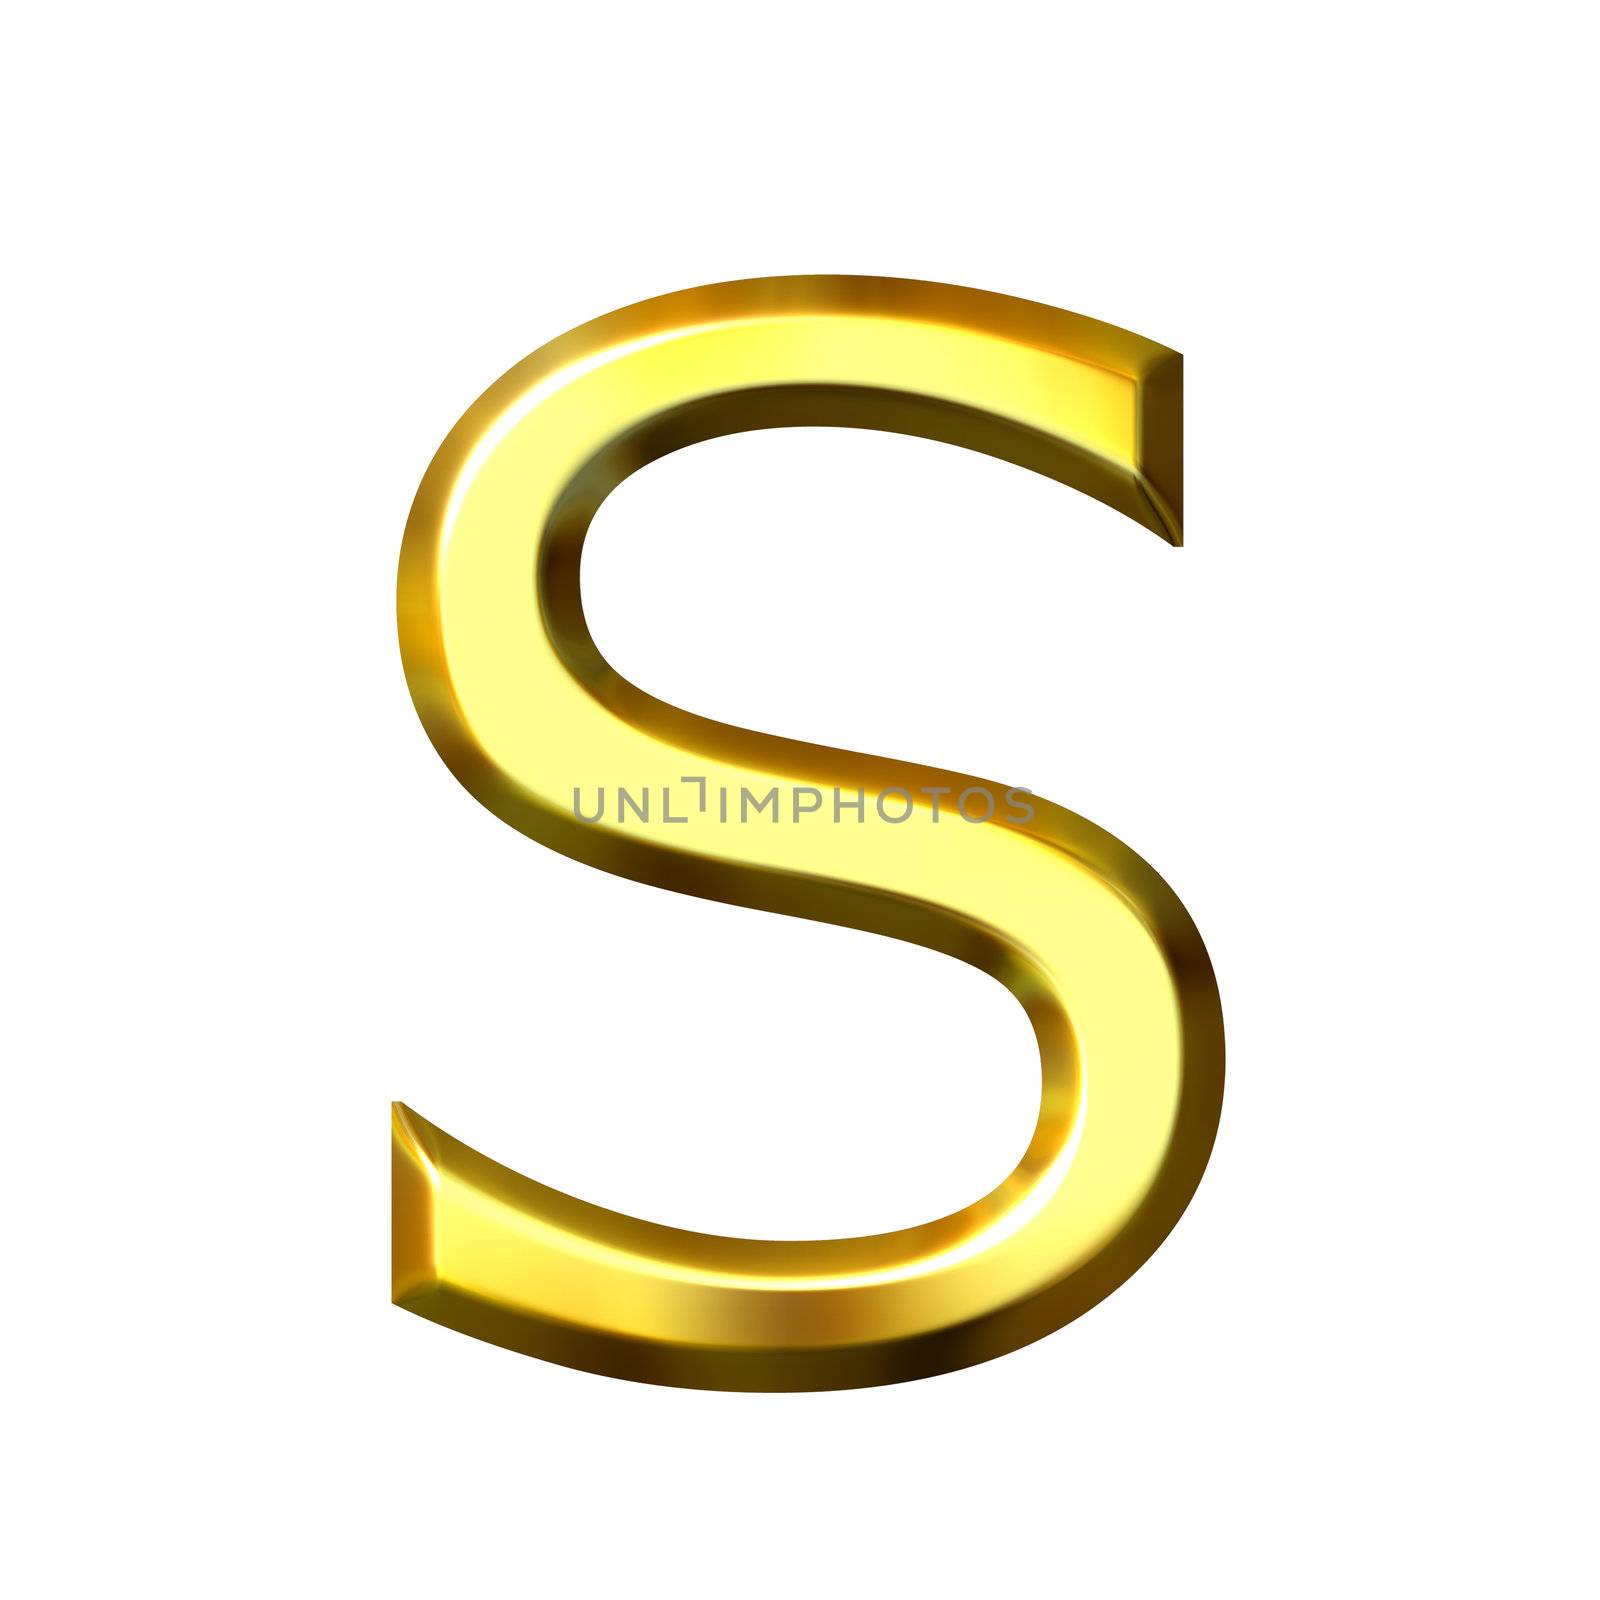 3d golden letter s isolated in white